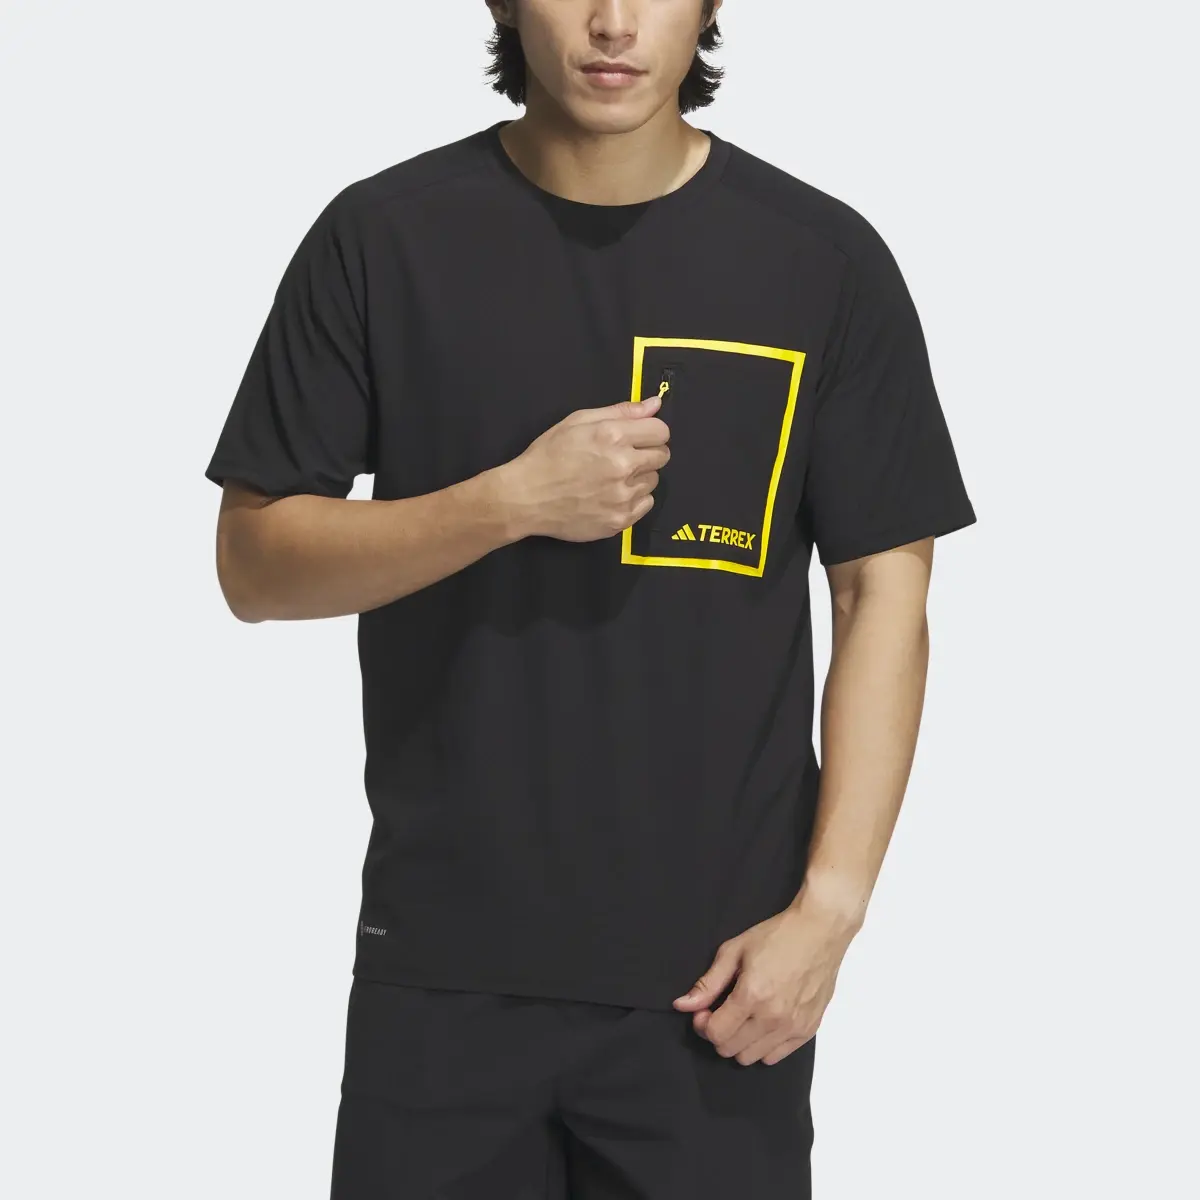 Adidas T-shirt National Geographic Short Sleeve. 1